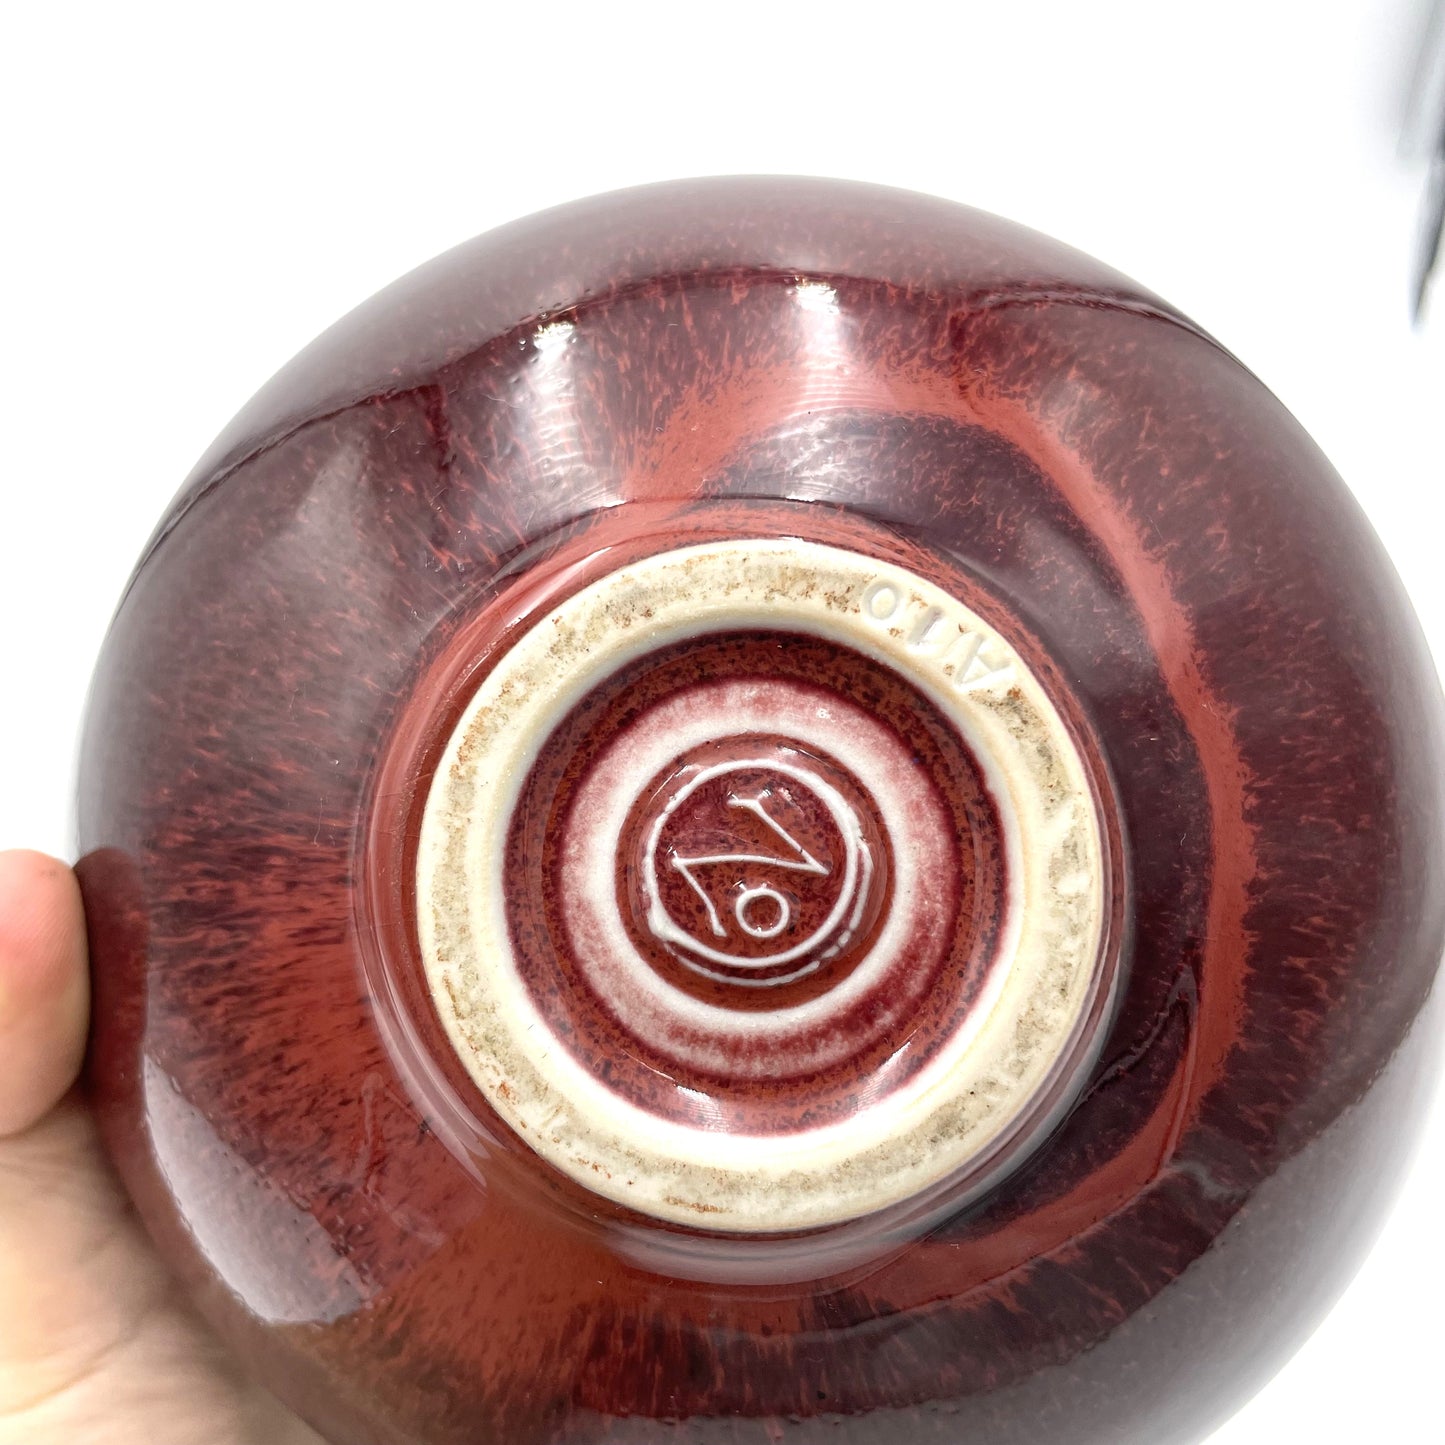 David Oswald Australia Pottery Vase - 13cm